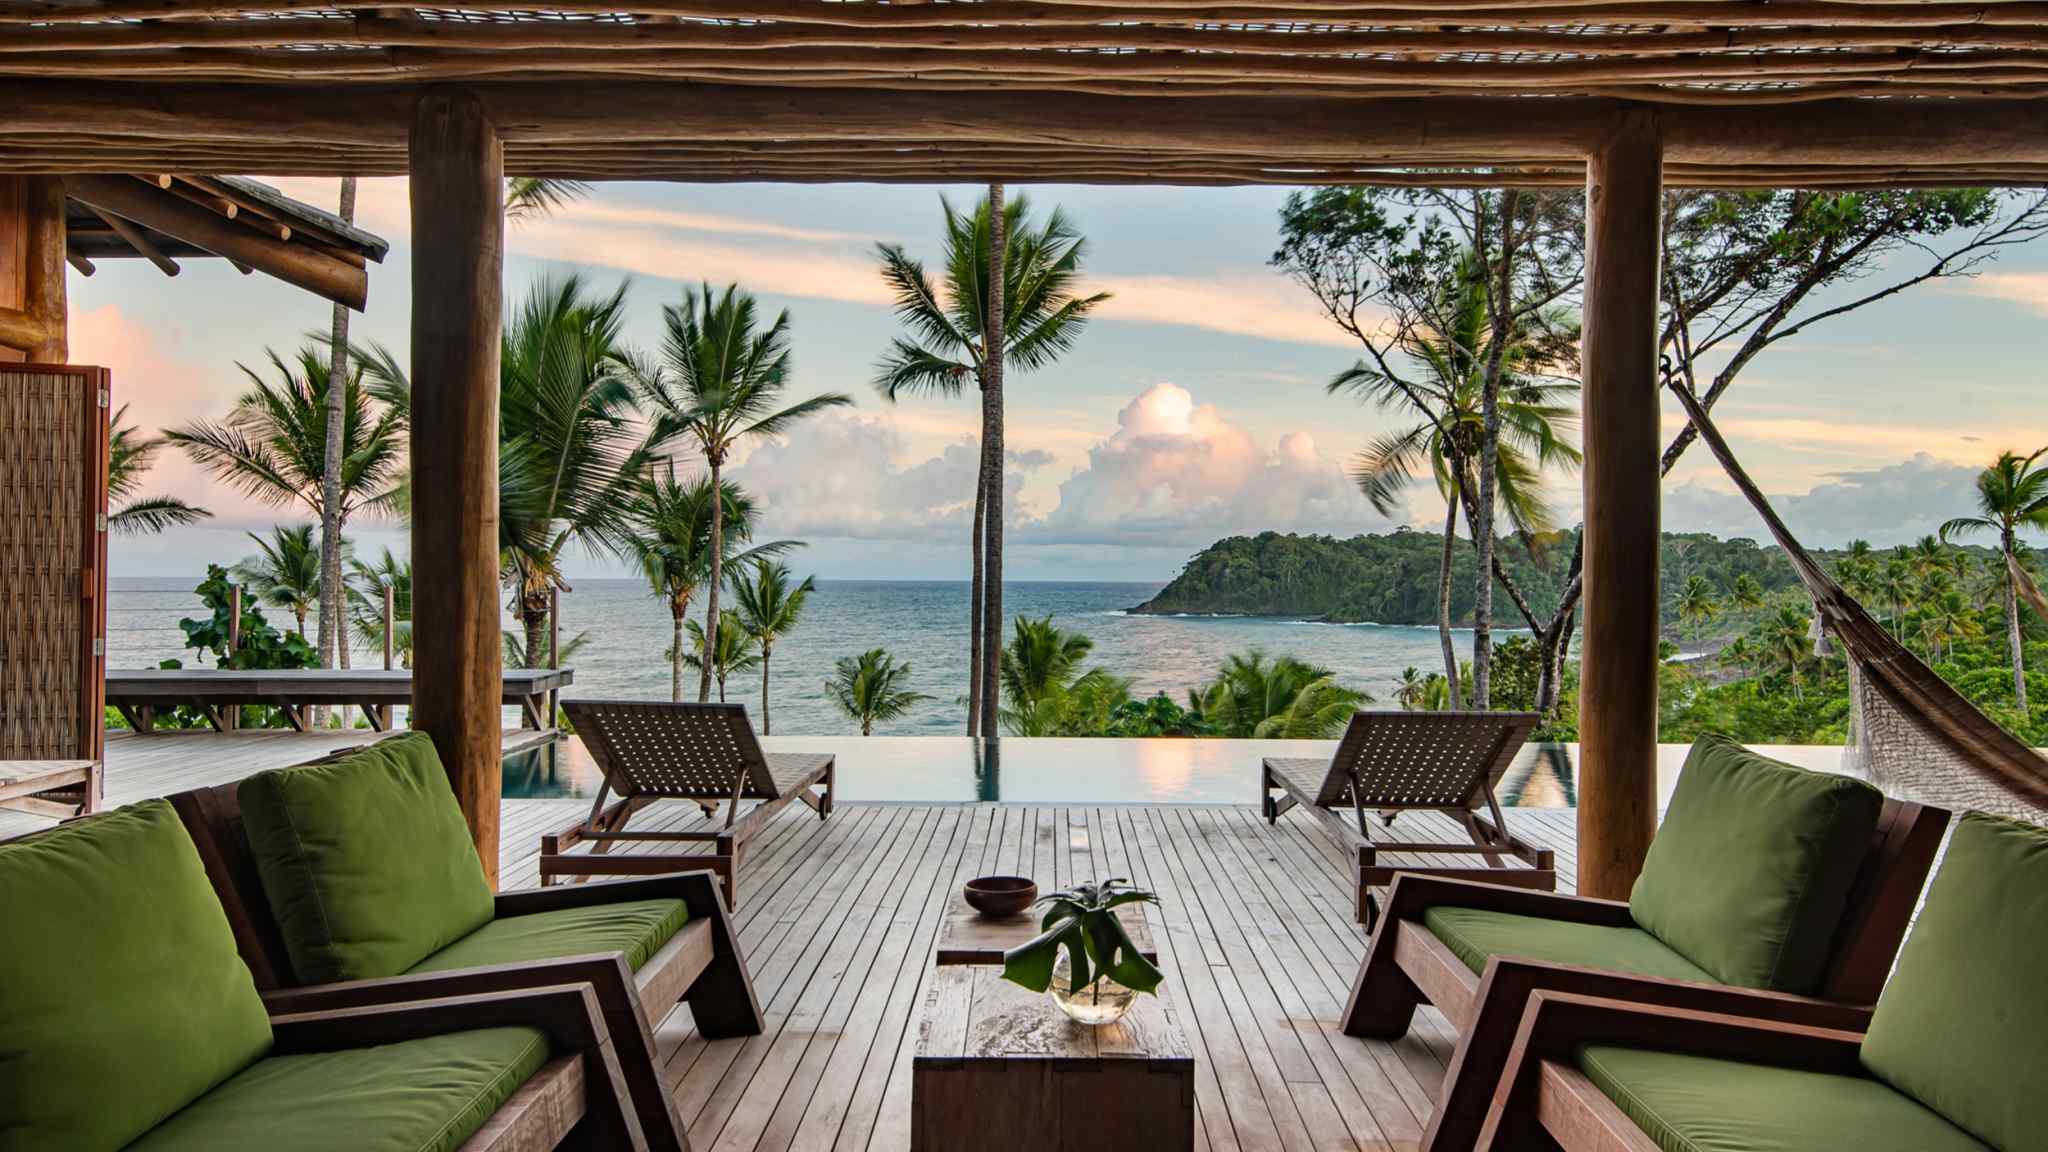 Five Brazilian beach and wilderness hotels